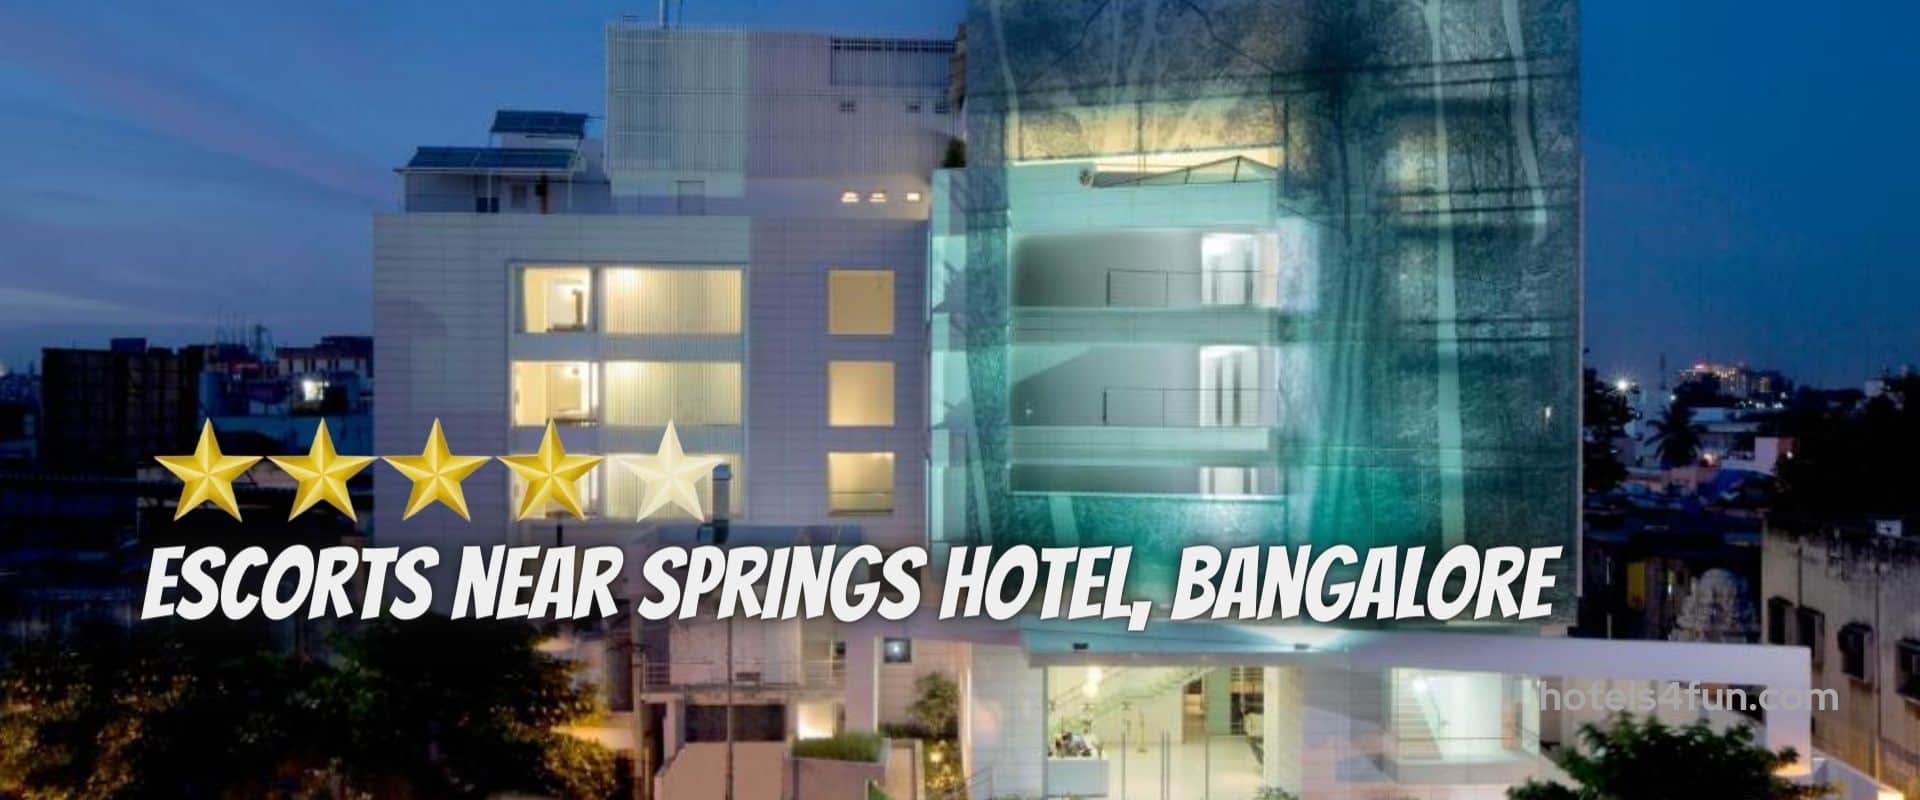 Springs Hotel Bangalore